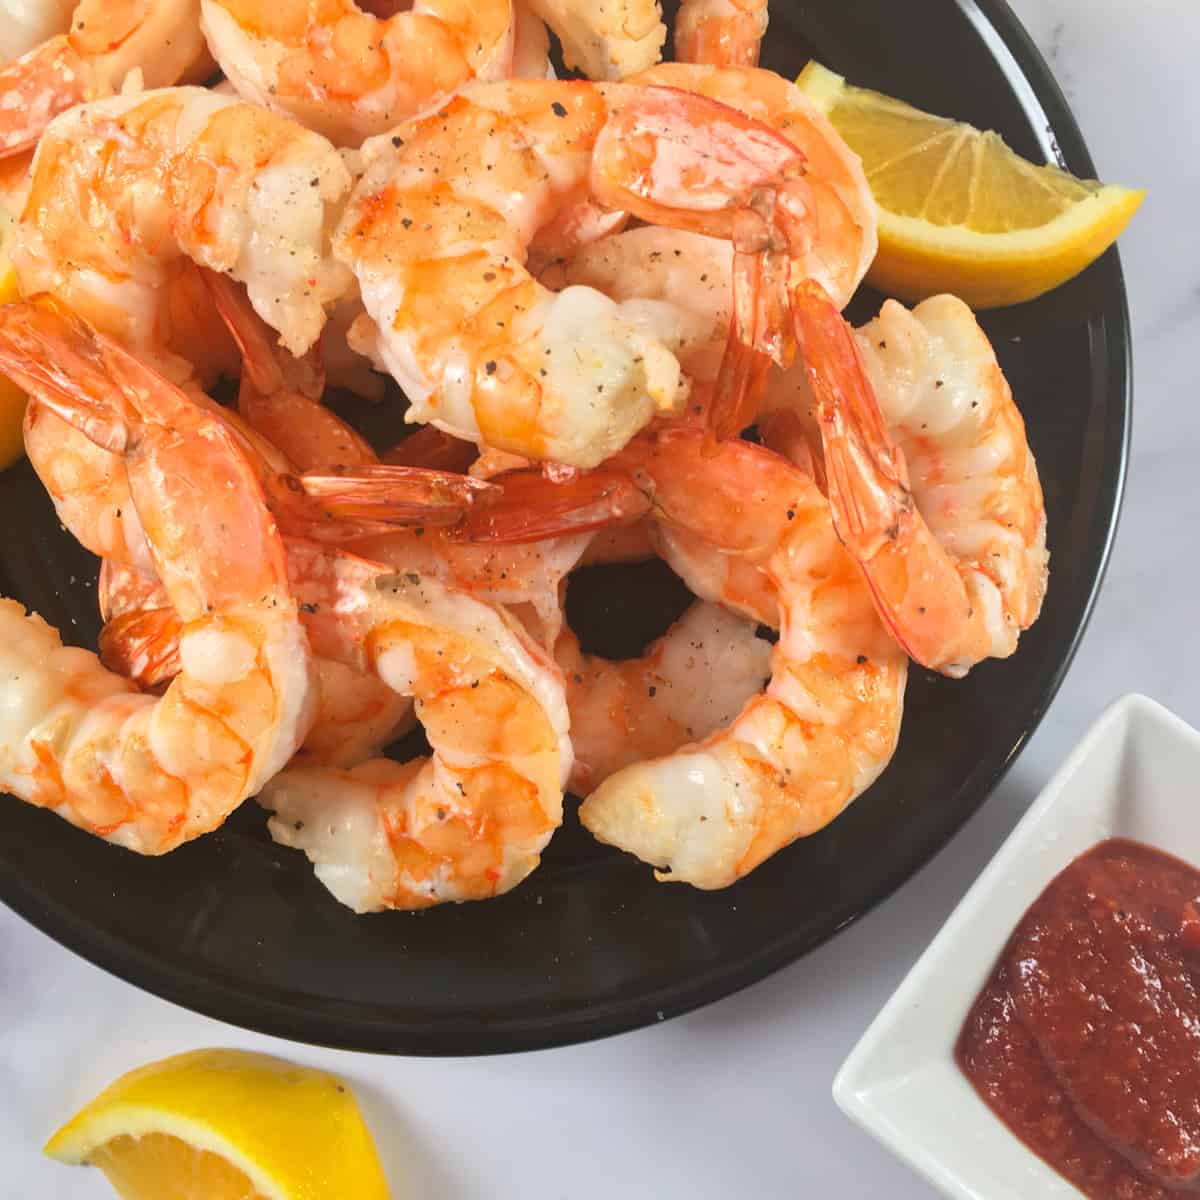 https://summeryule.com/wp-content/uploads/2021/04/frozen-shrimp-air-fryer-recipe.jpeg